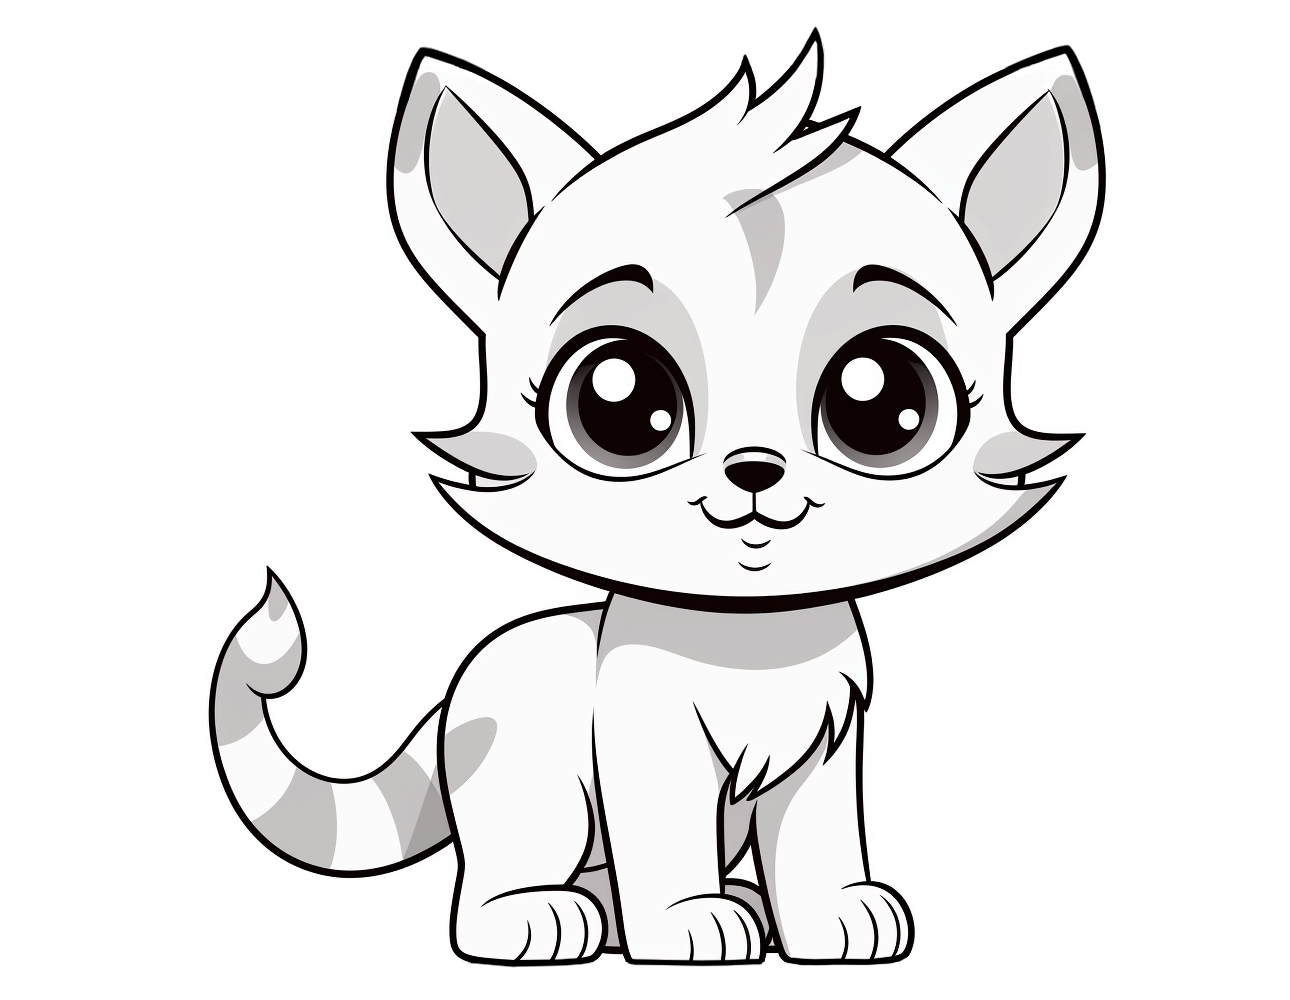 Imagen de un dibujo de una linda gatita